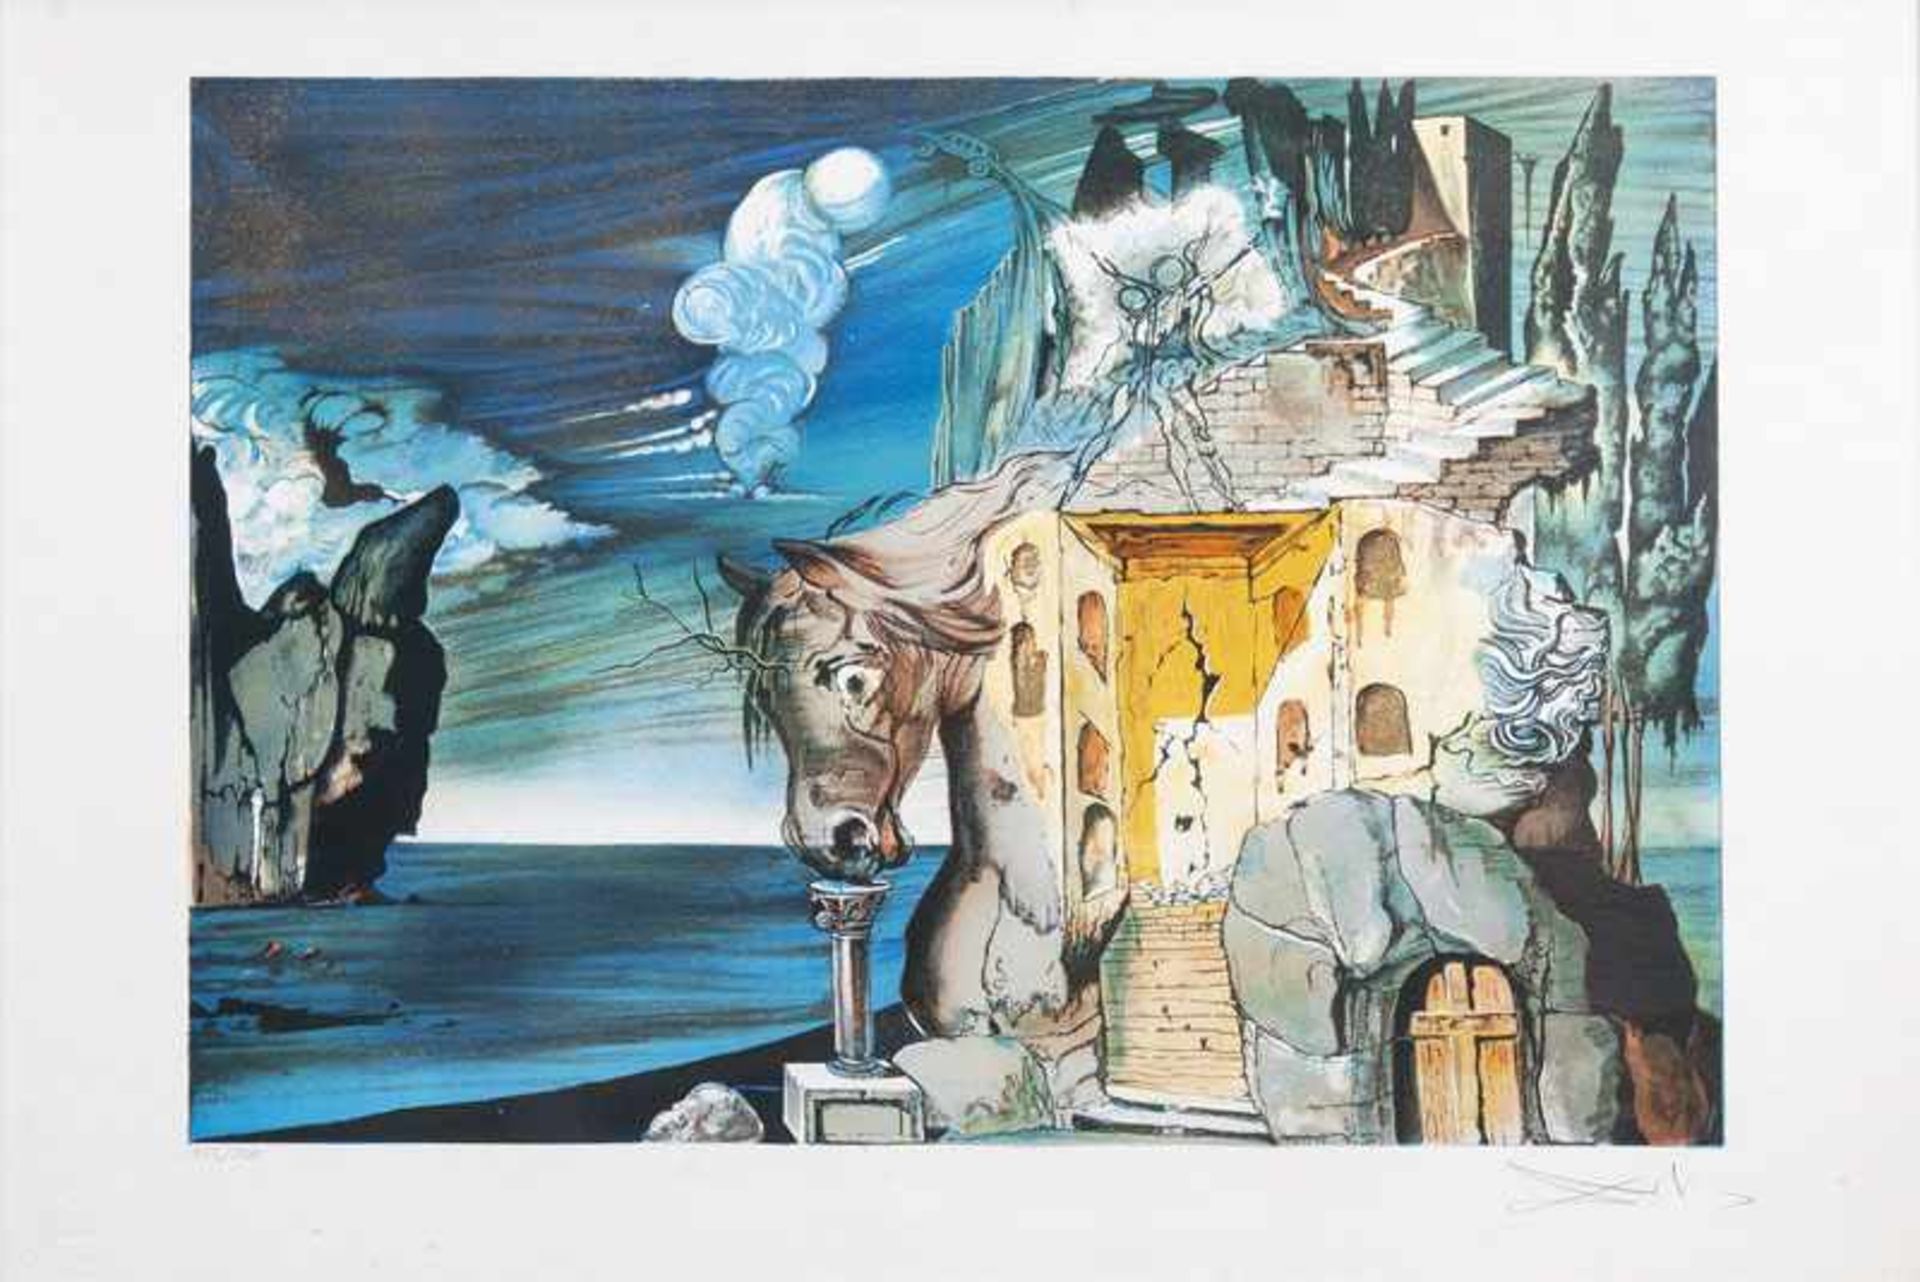 Salvador Dalí (Figueres 1904 - Figueres 1989) Der wilde Tristan 1981, Farblithographie u. Goldstaub,